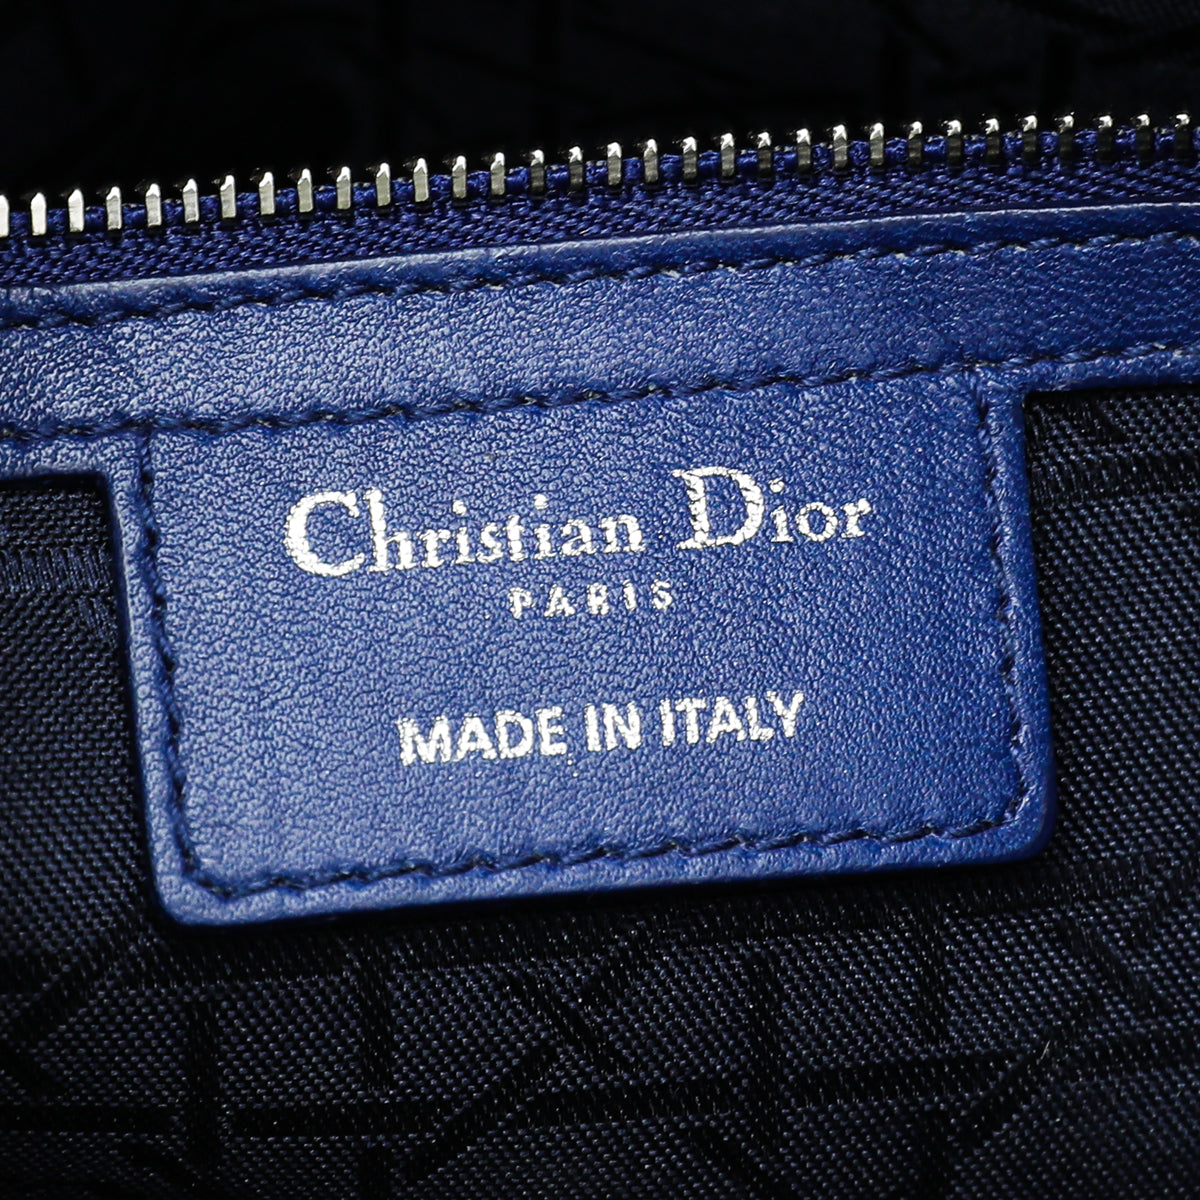 Christian Dior Blue Lady Dior Large Bag